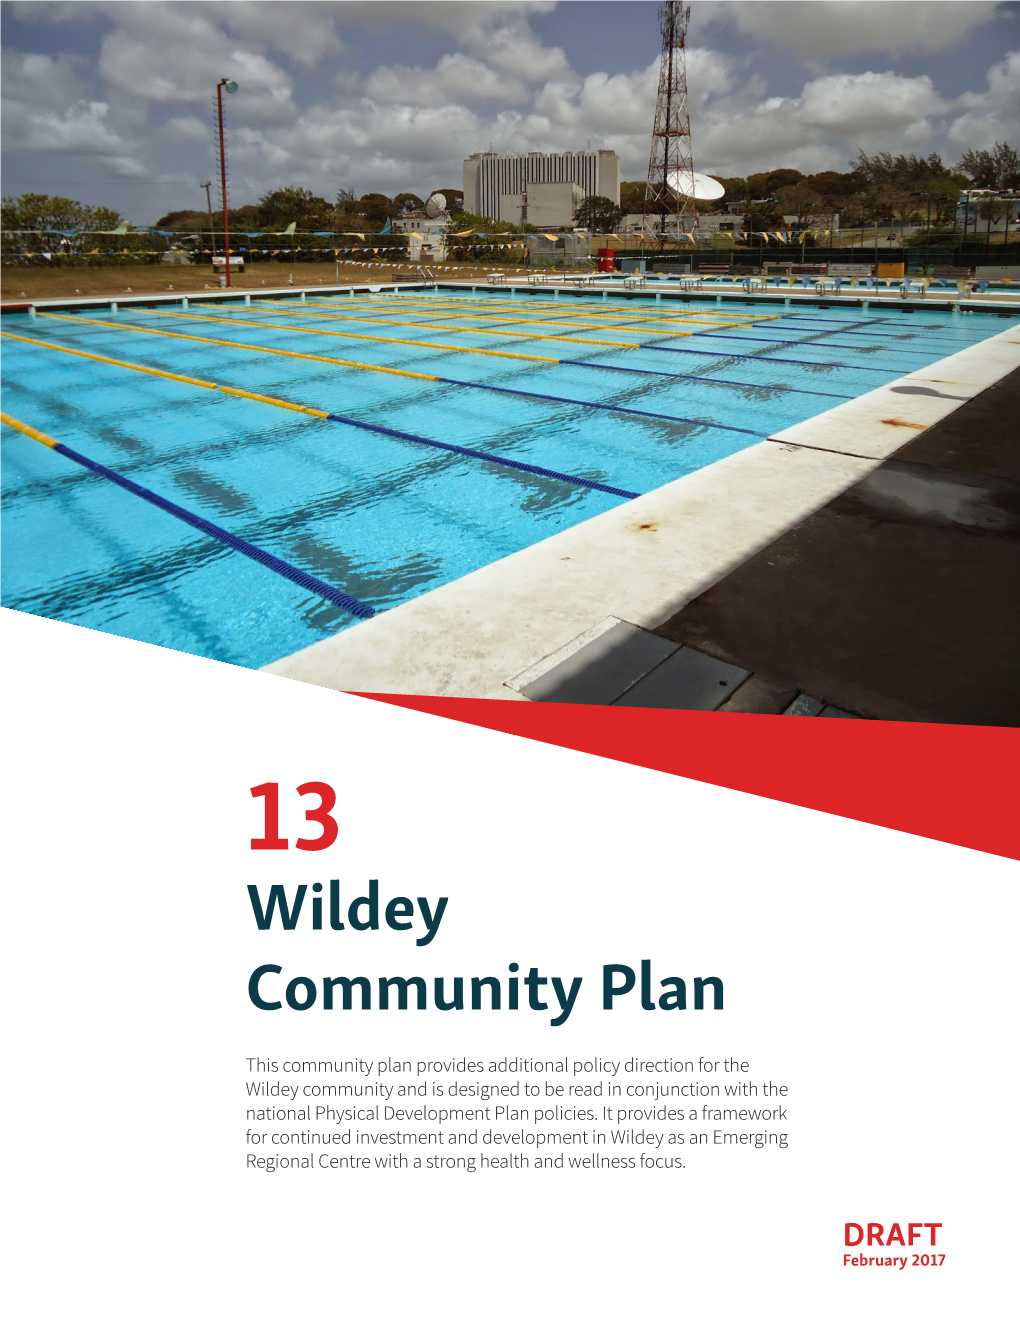 Wildey Community Plan